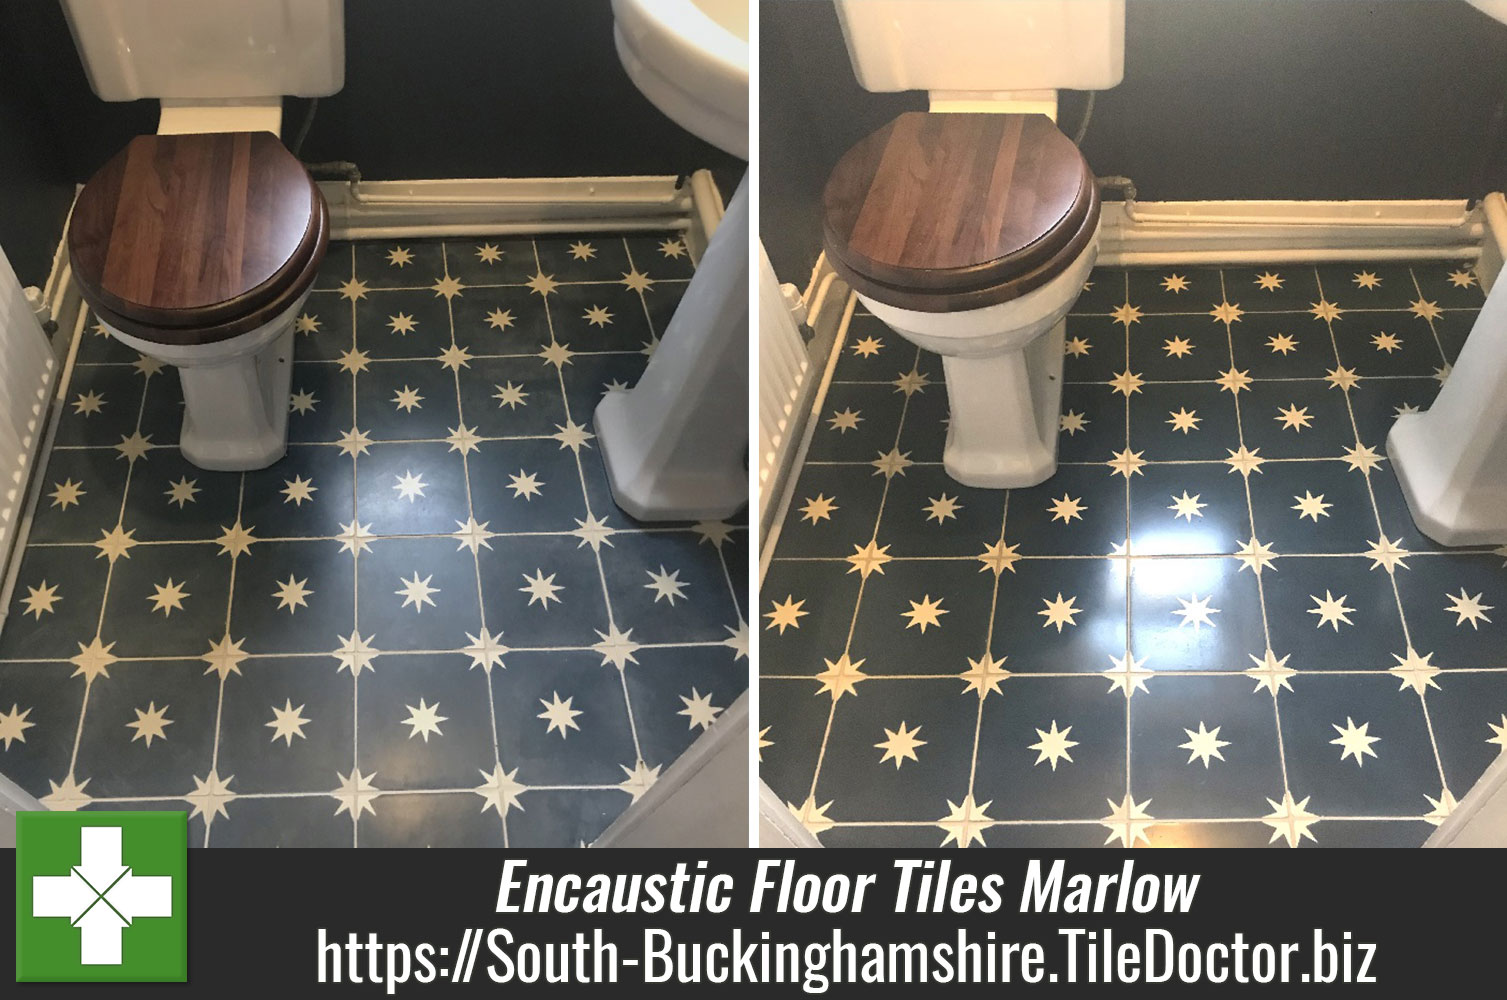 Removing Stains from Encaustic Floor Tiles in Marlow Bucks